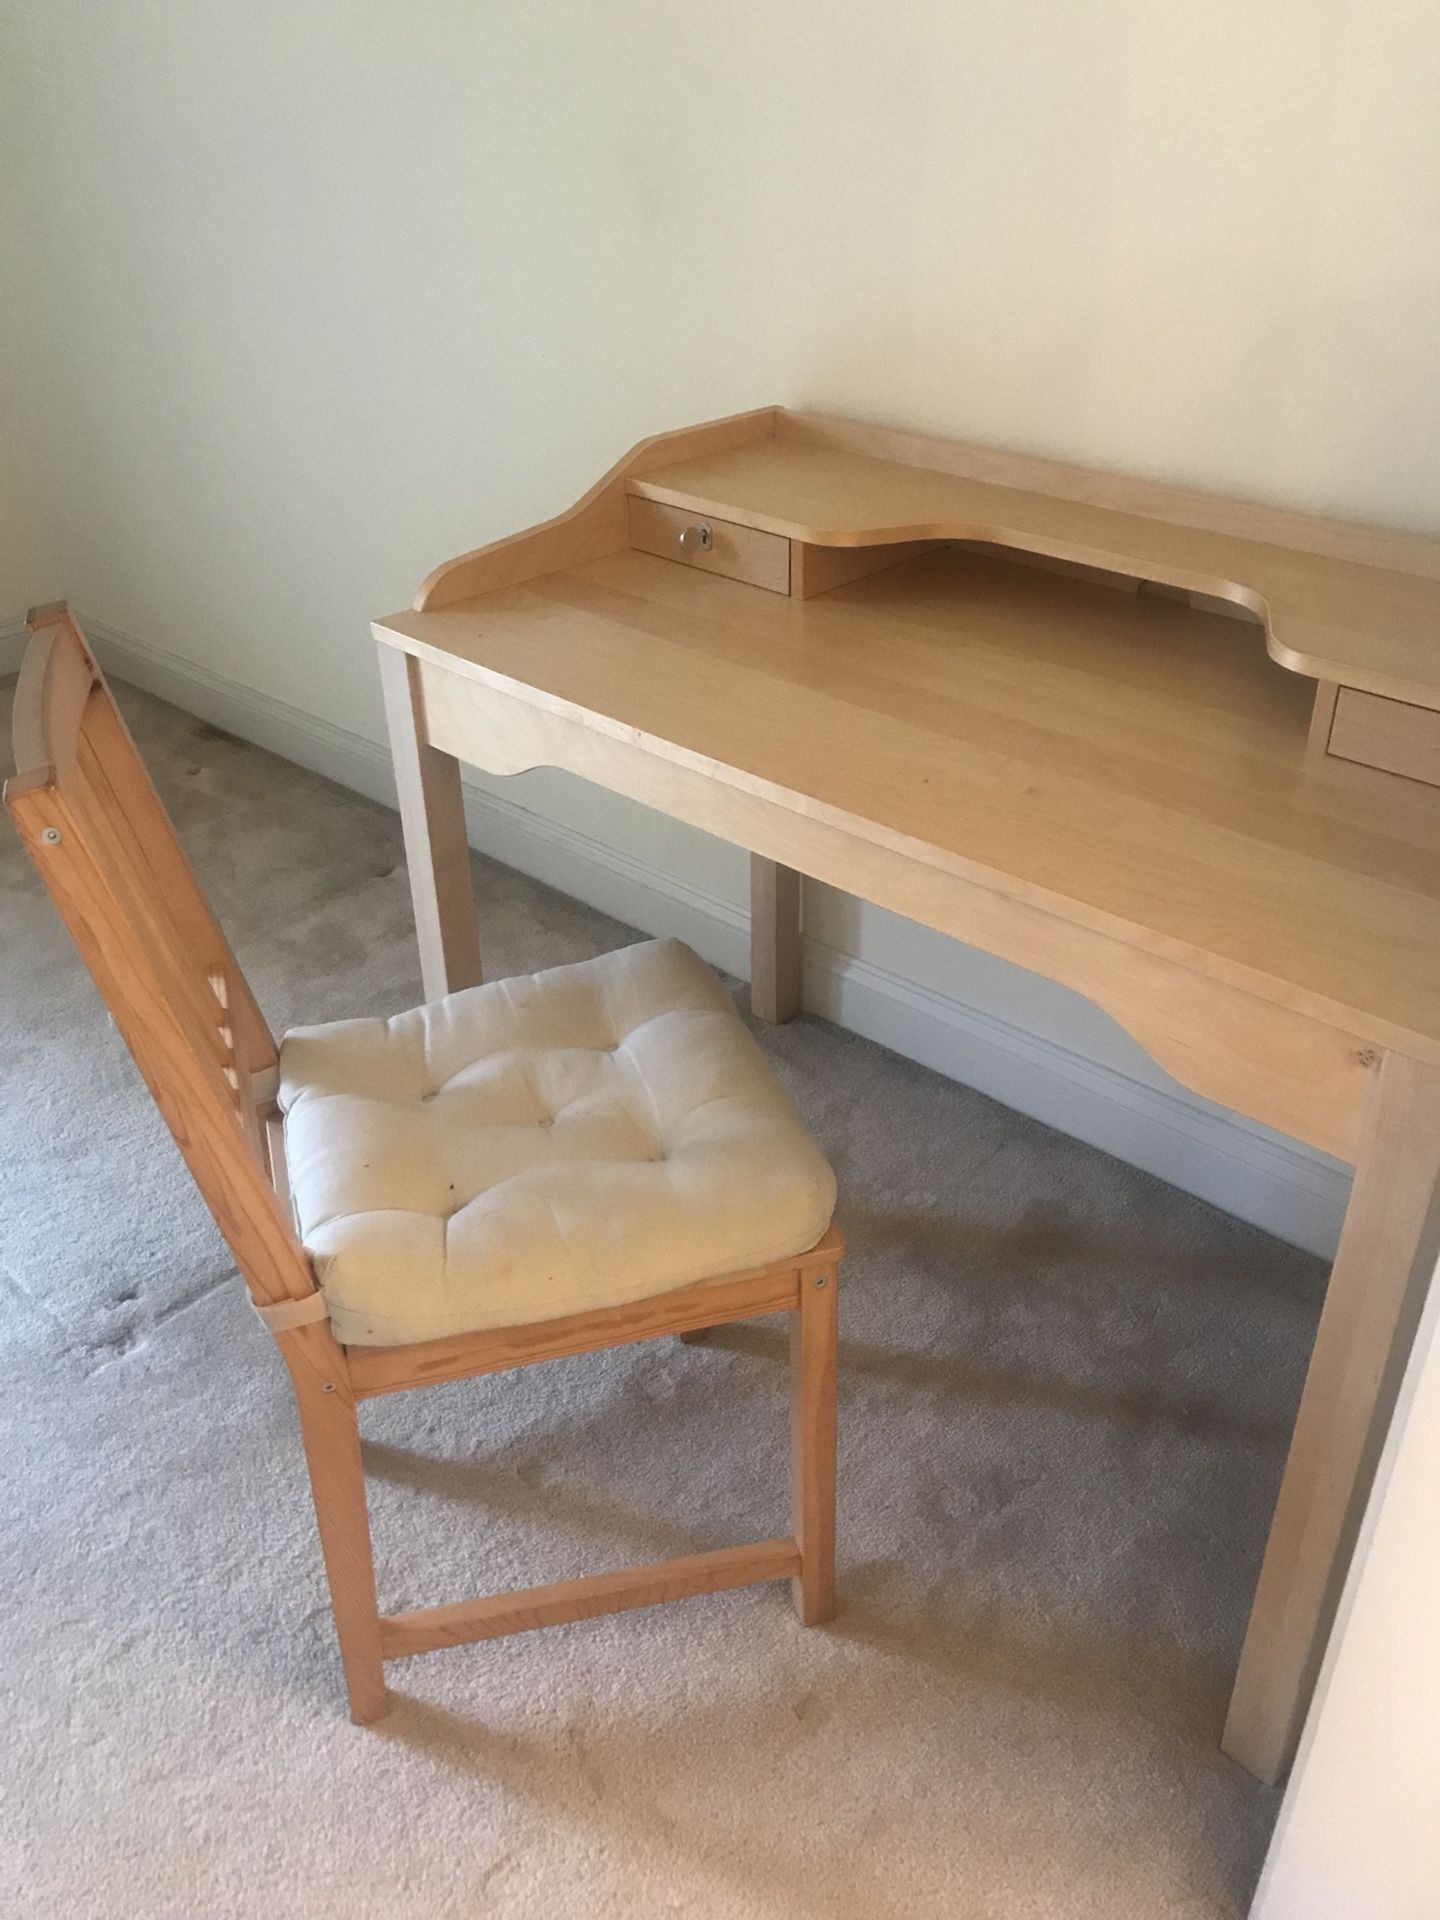 Desk + chair